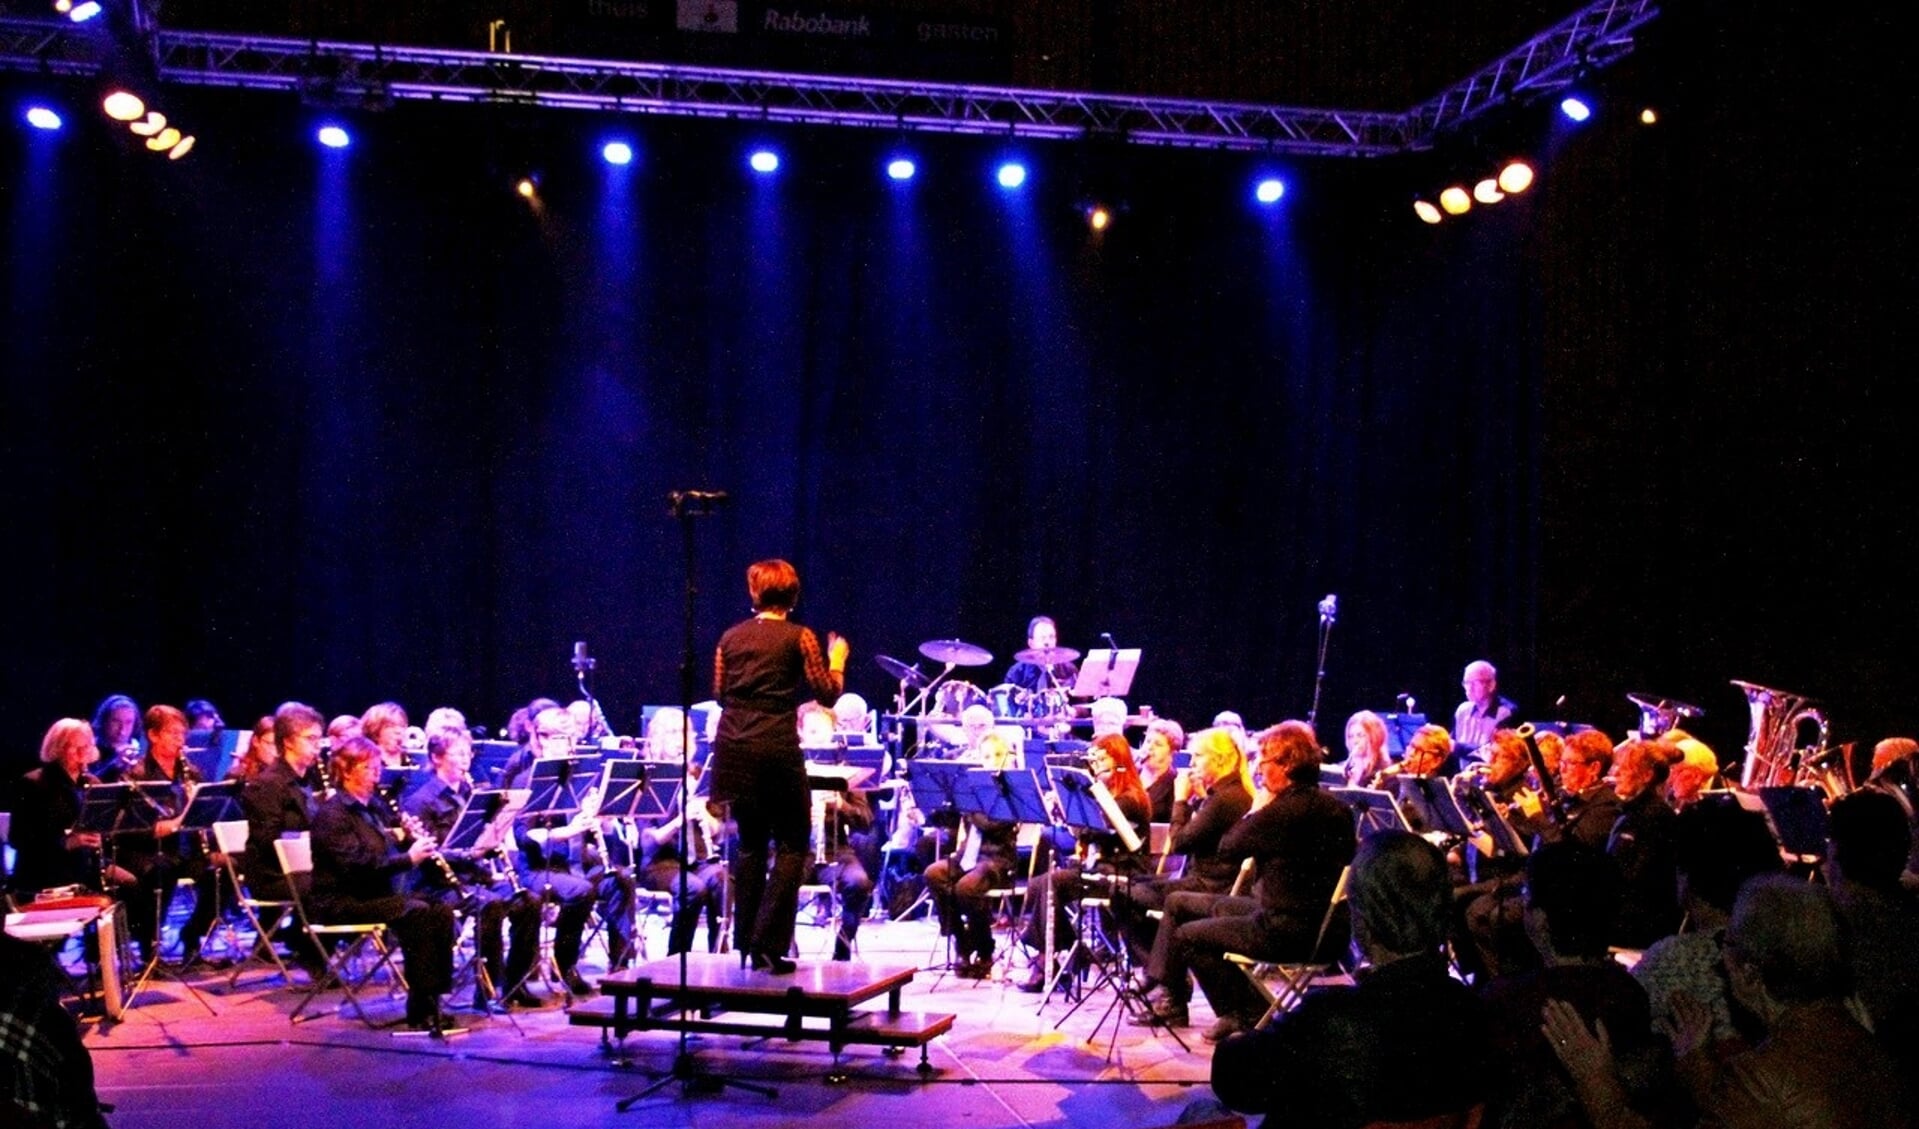 De harmonie van Muziekvereniging Nieuw Leven. Foto: Stein Oukes